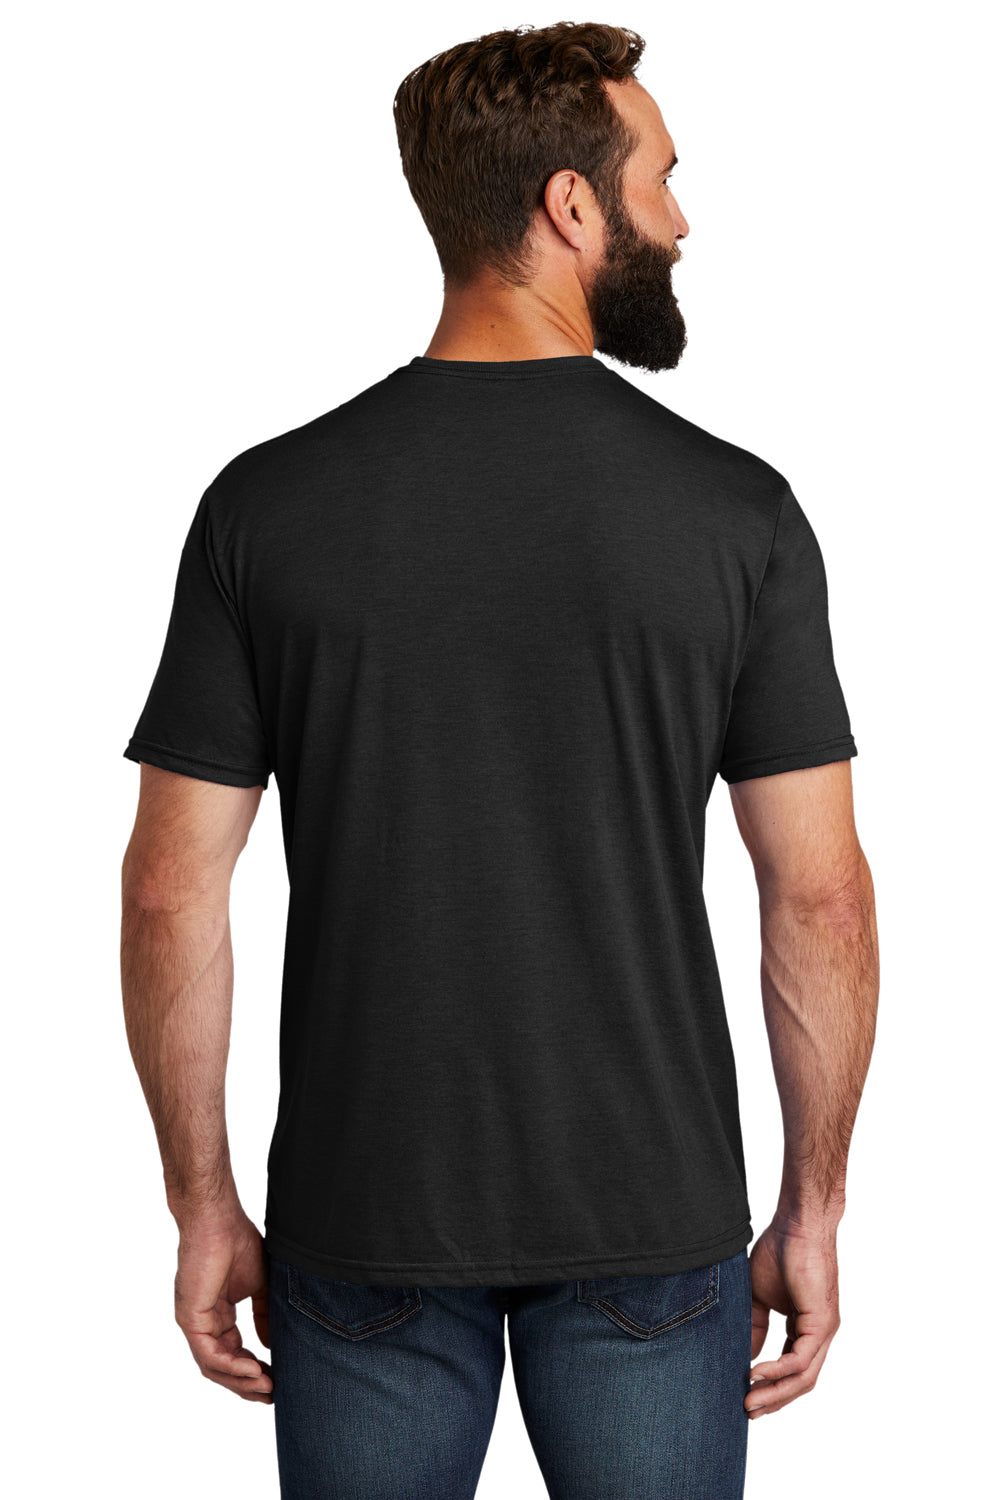 Allmade AL2004 Mens Short Sleeve Crewneck T-Shirt Space Black Model Back